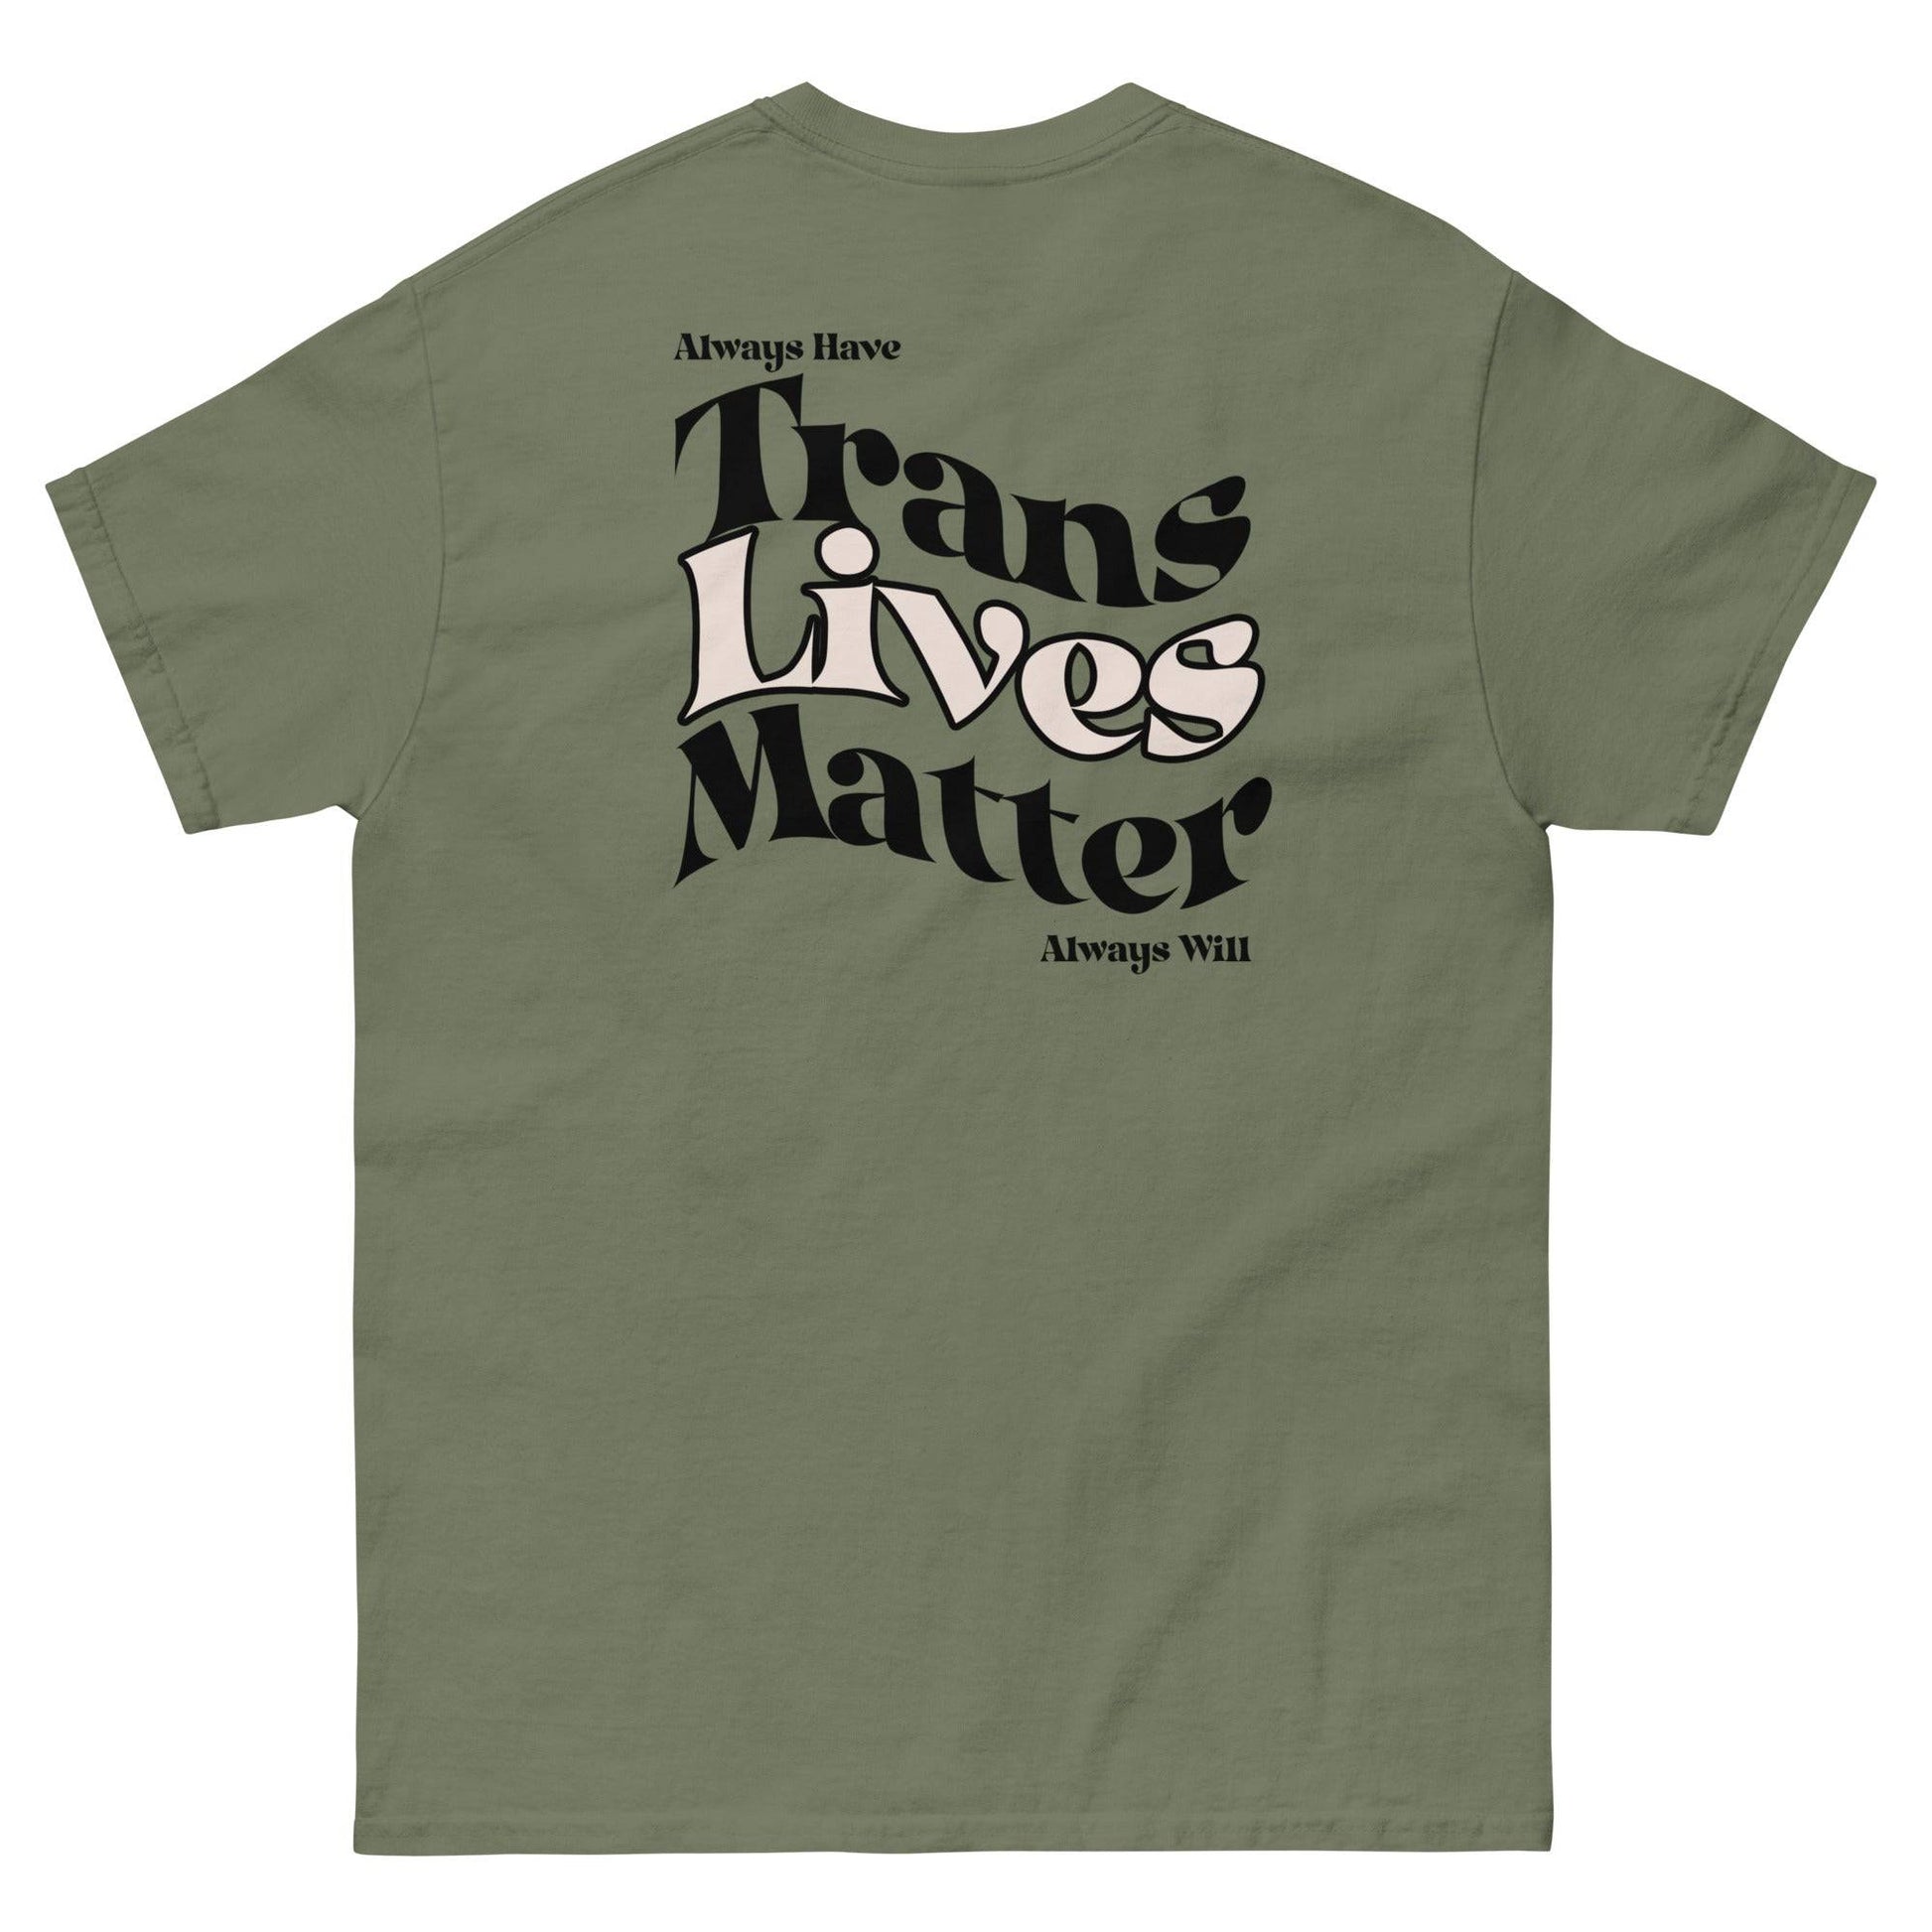 Trans Lives Matter classic tee - Rose Gold Co. Shop